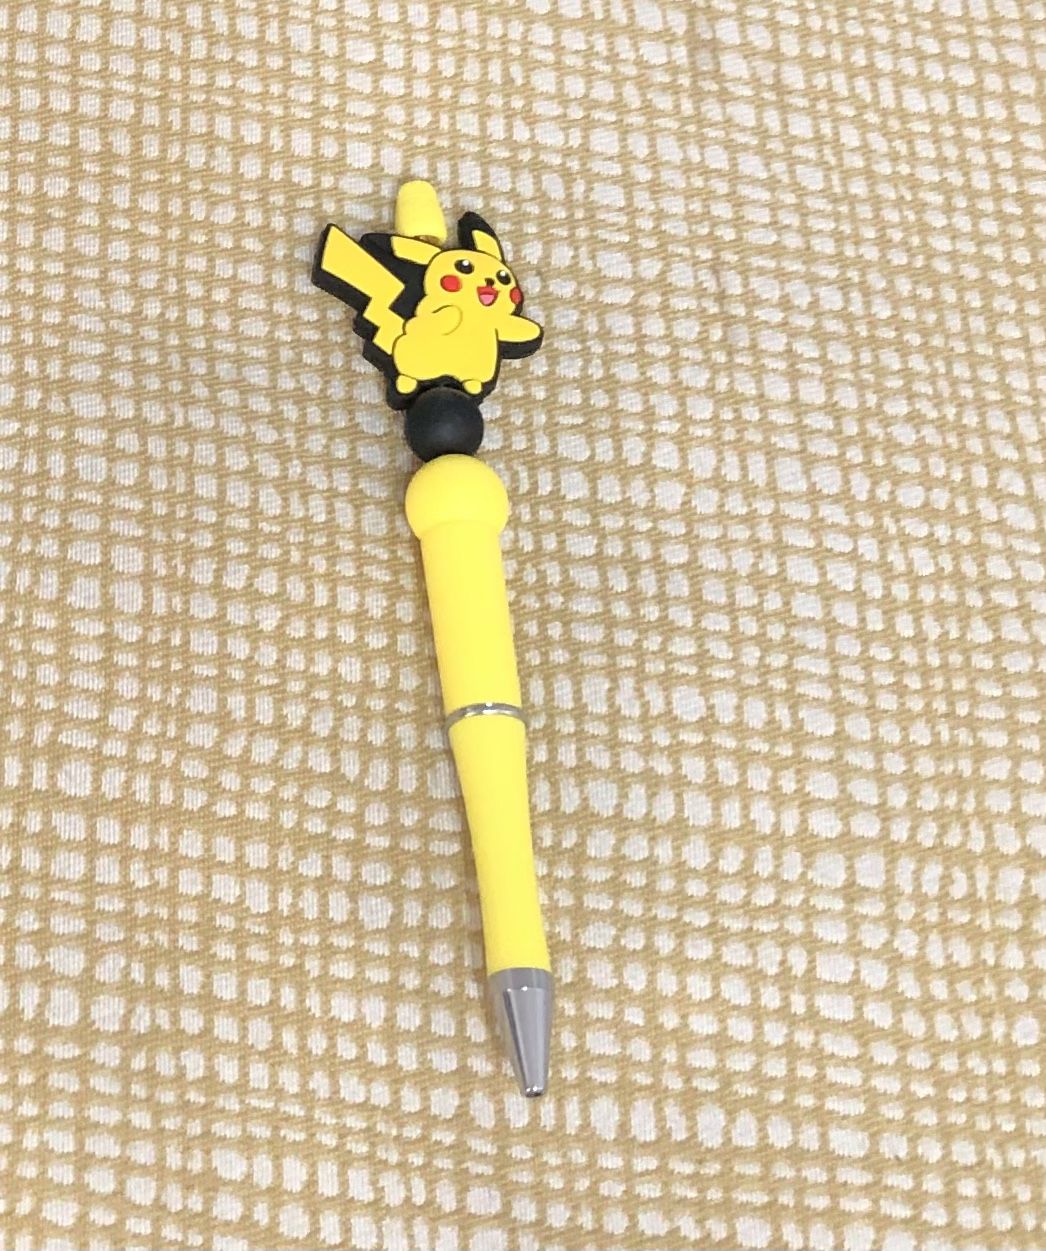 Pokémon pikashu beads pen. Color  yellow. Size 6”LX 1” W